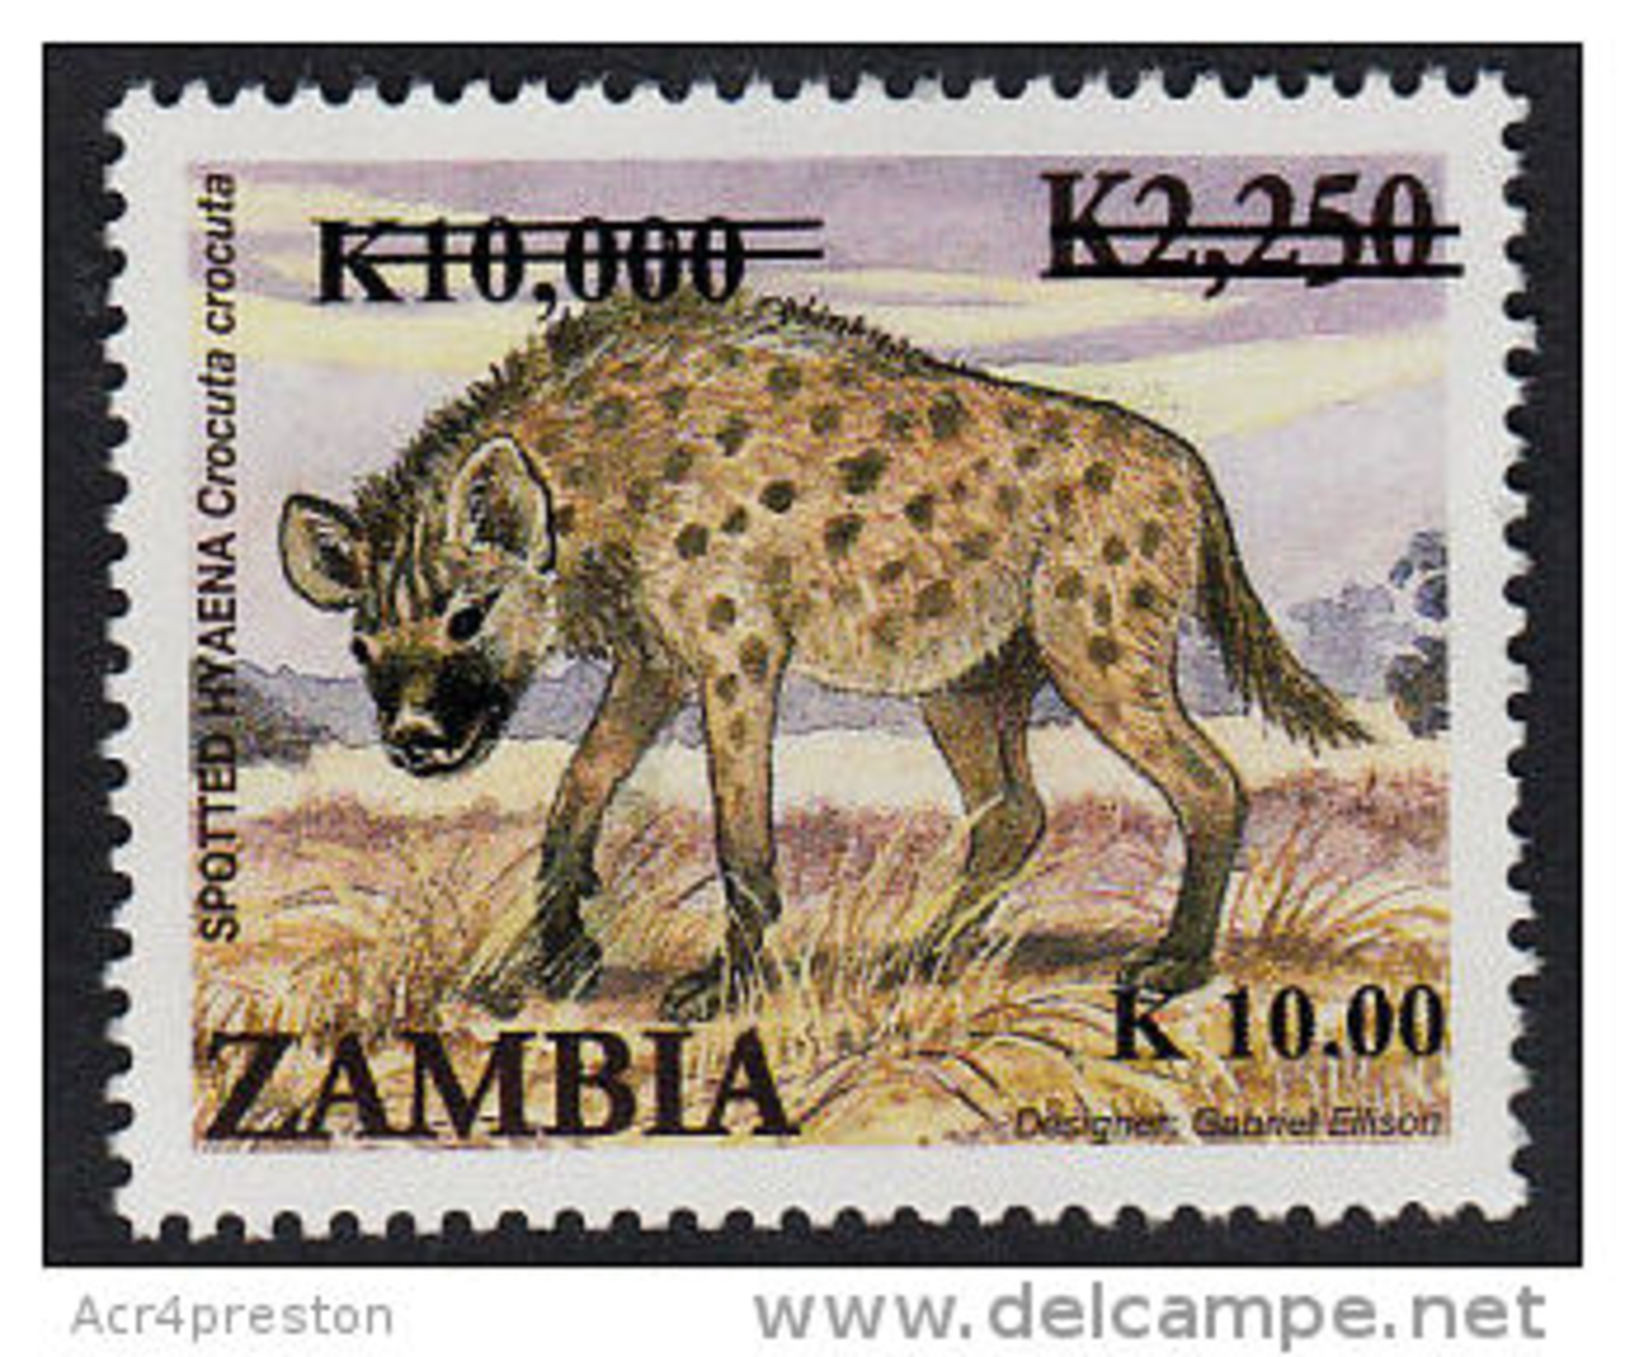 Zm1104 ZAMBIA 2013, SG1104 New Currency K10.00 On  K10,000 On K2,250 Animals  MNH - Zambia (1965-...)